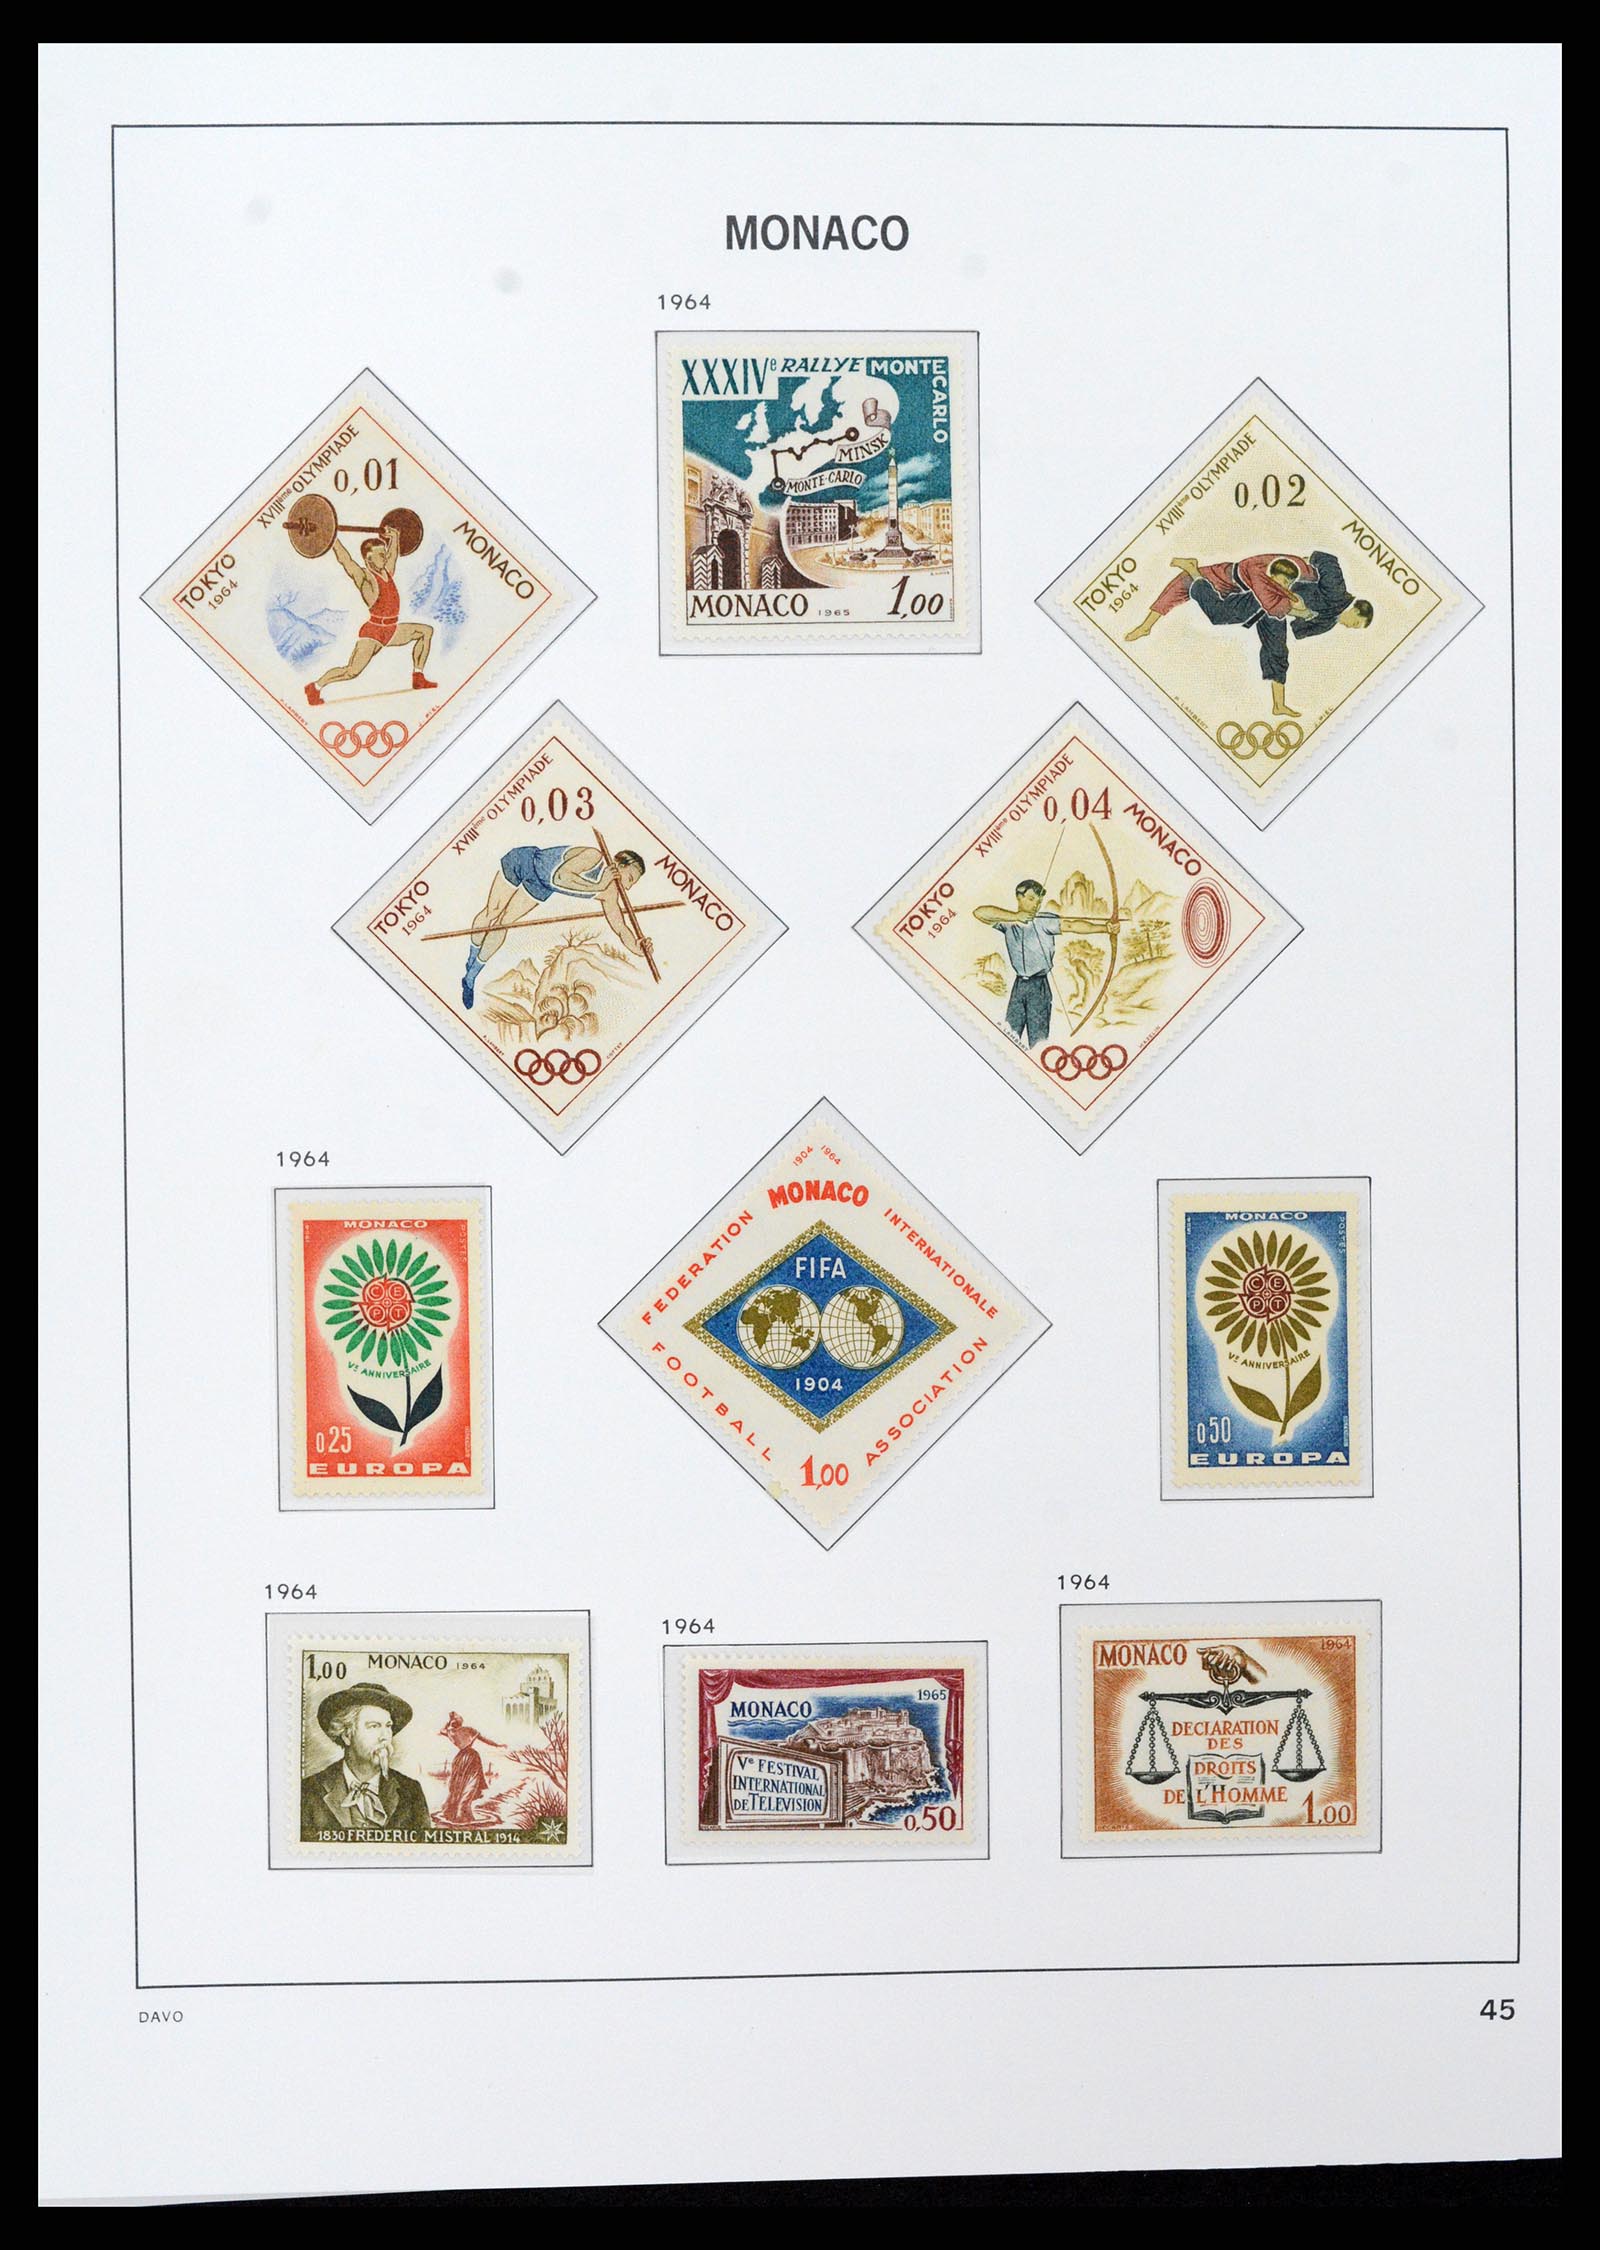 37279 045 - Stamp collection 37279 Monaco 1885-1969.